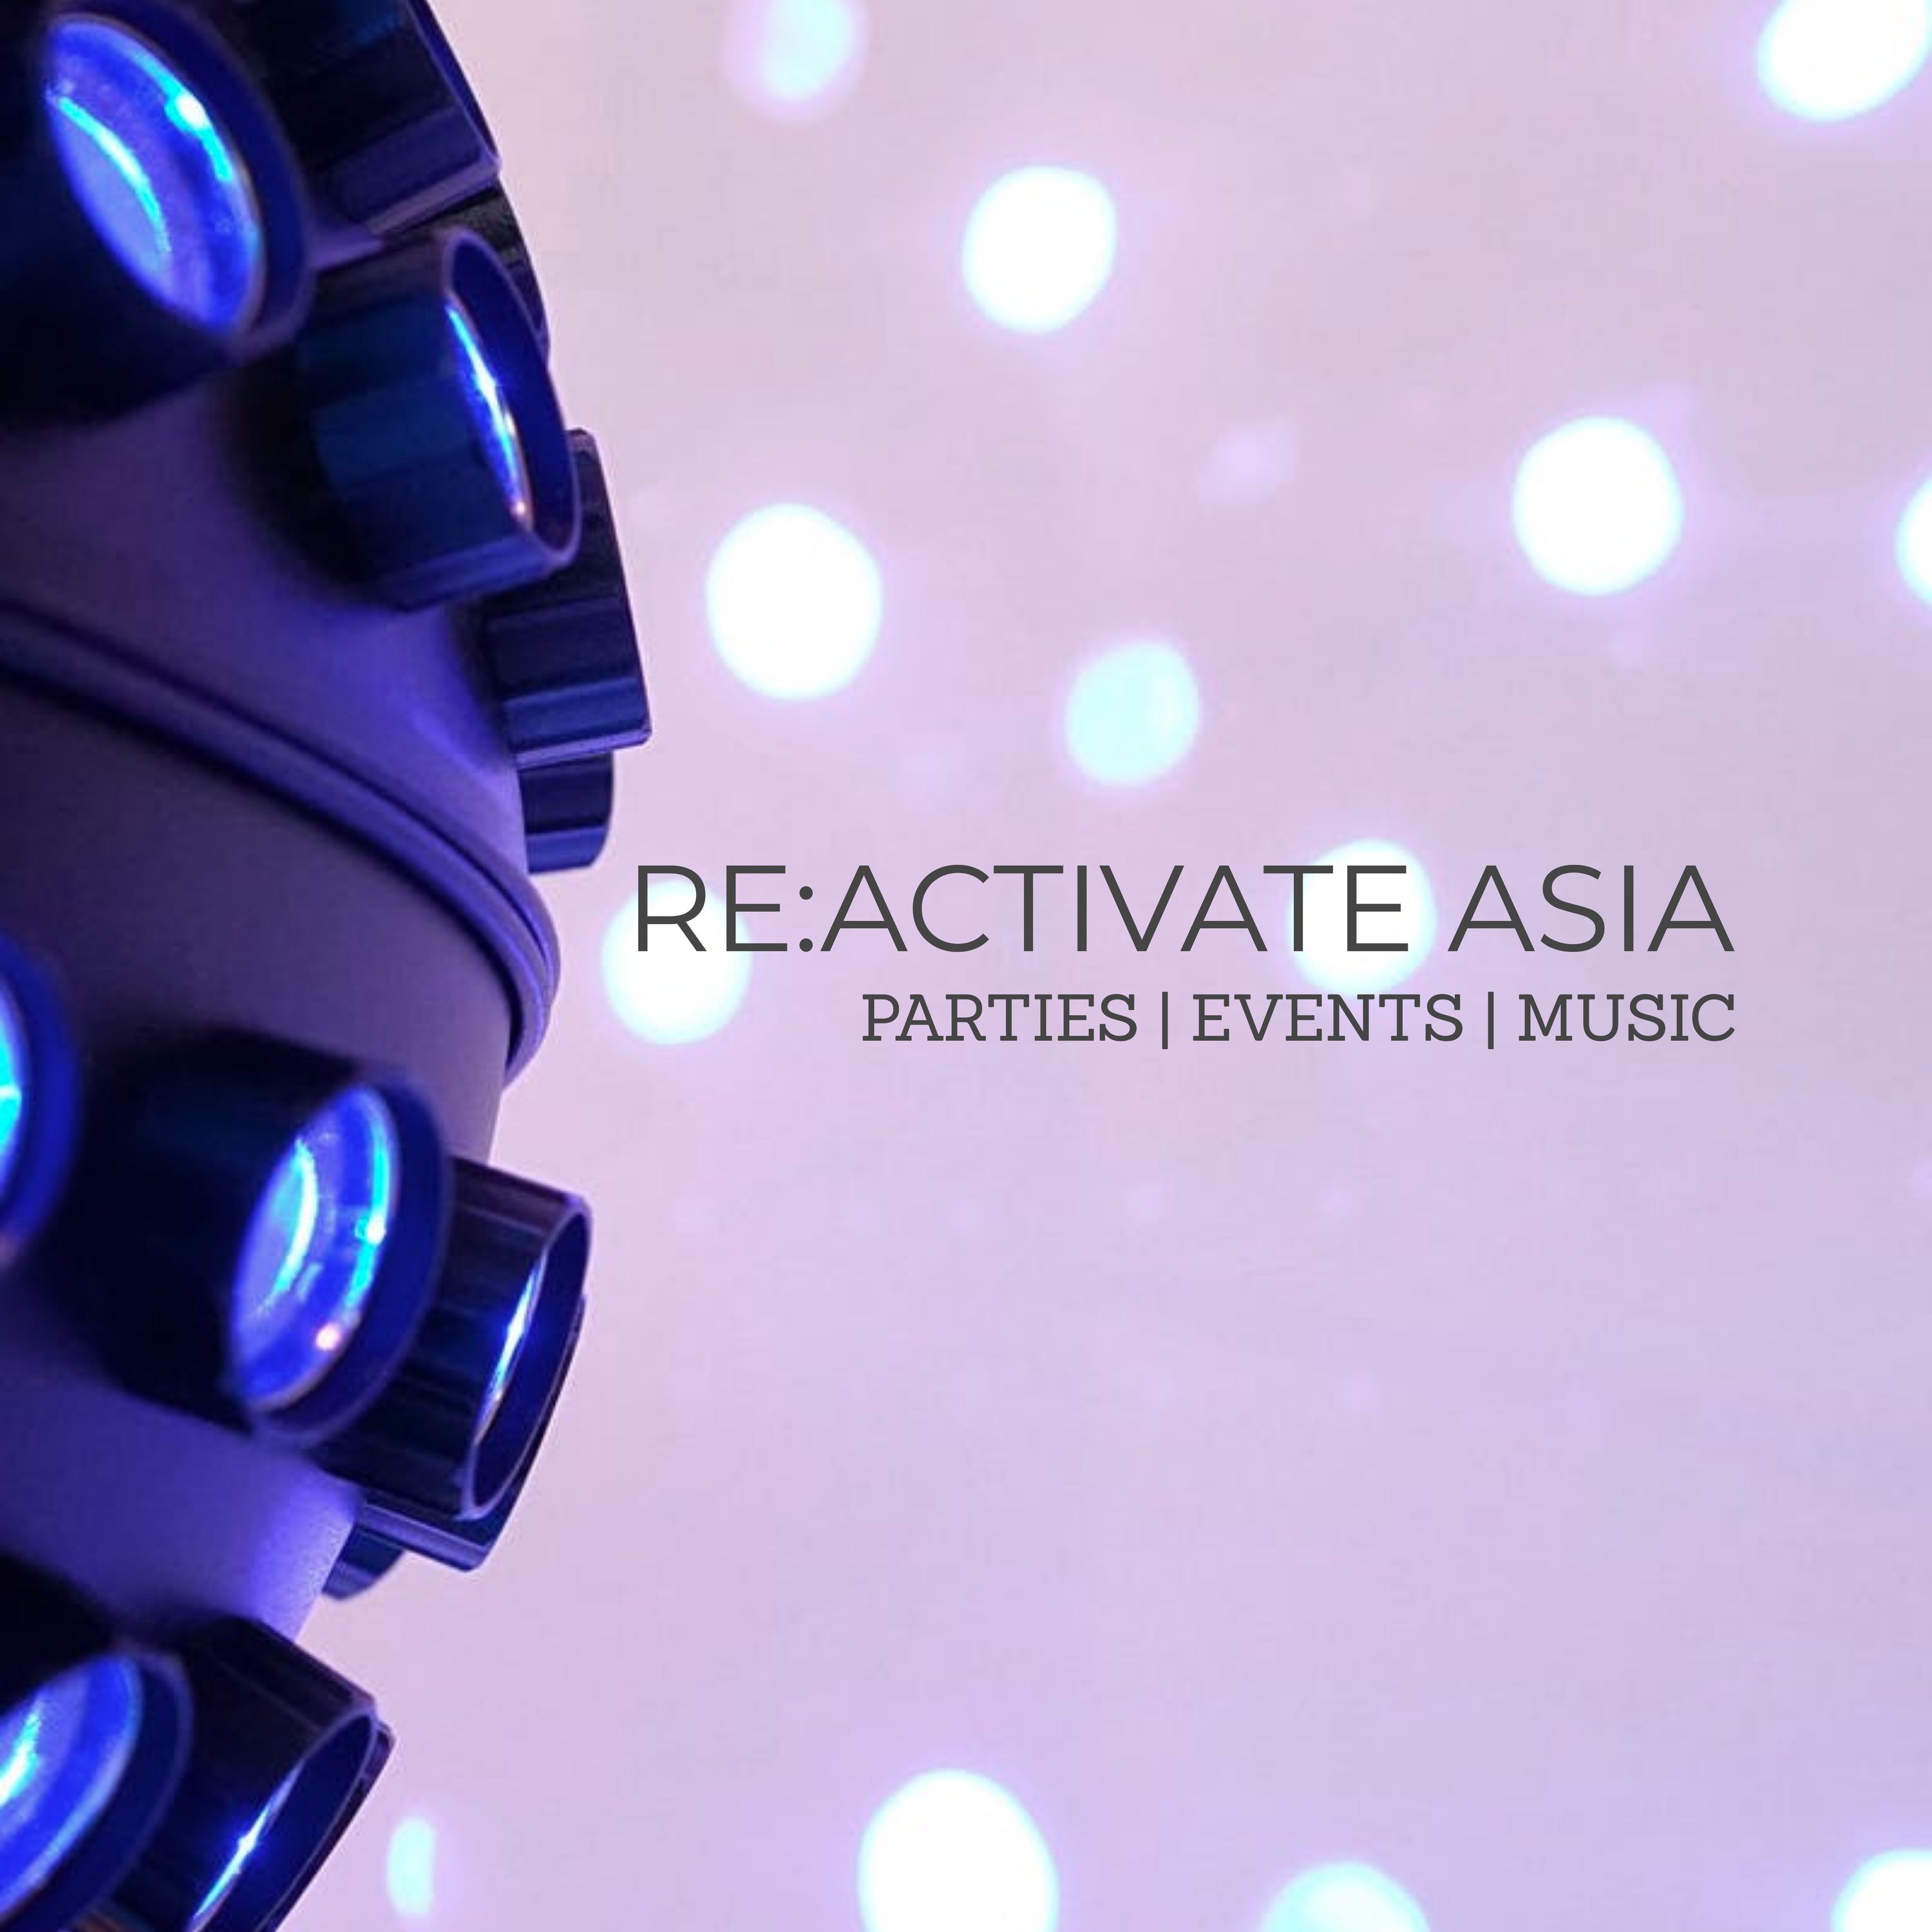 Re:activate Asia